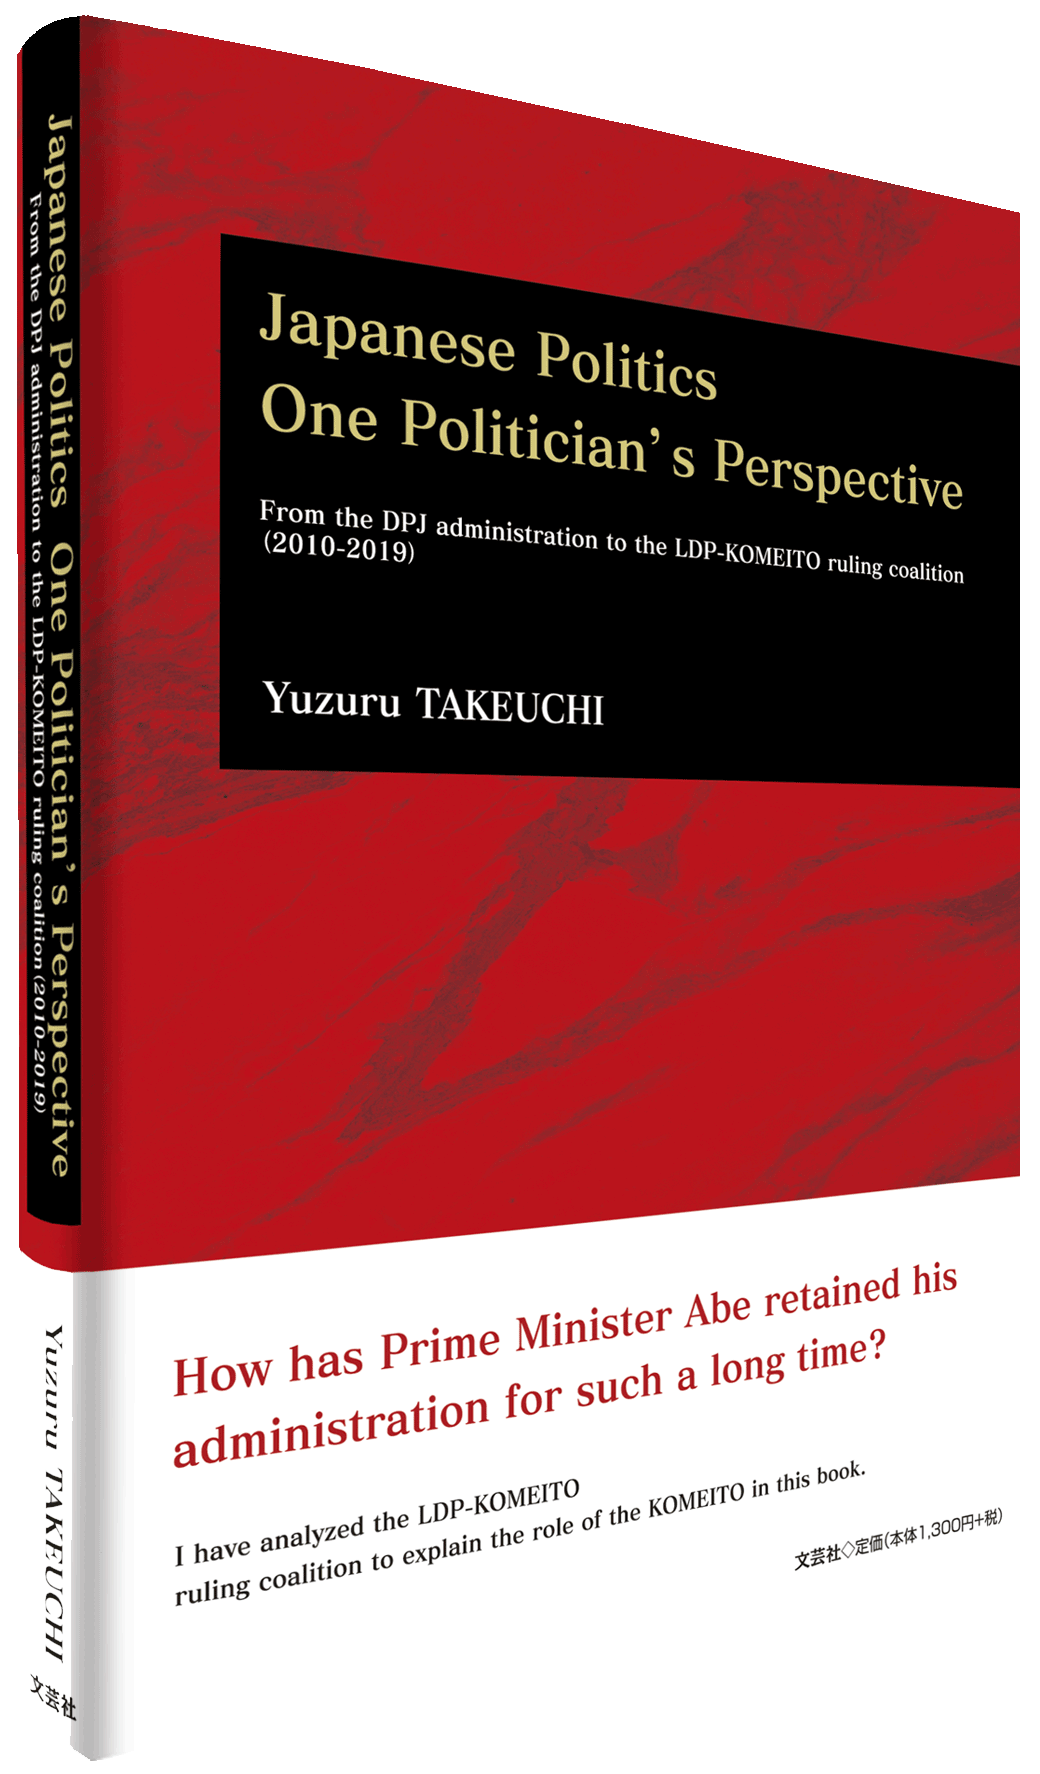 Japanese Politics One Politician's Perspective by Yuzuru TAKEUCHI